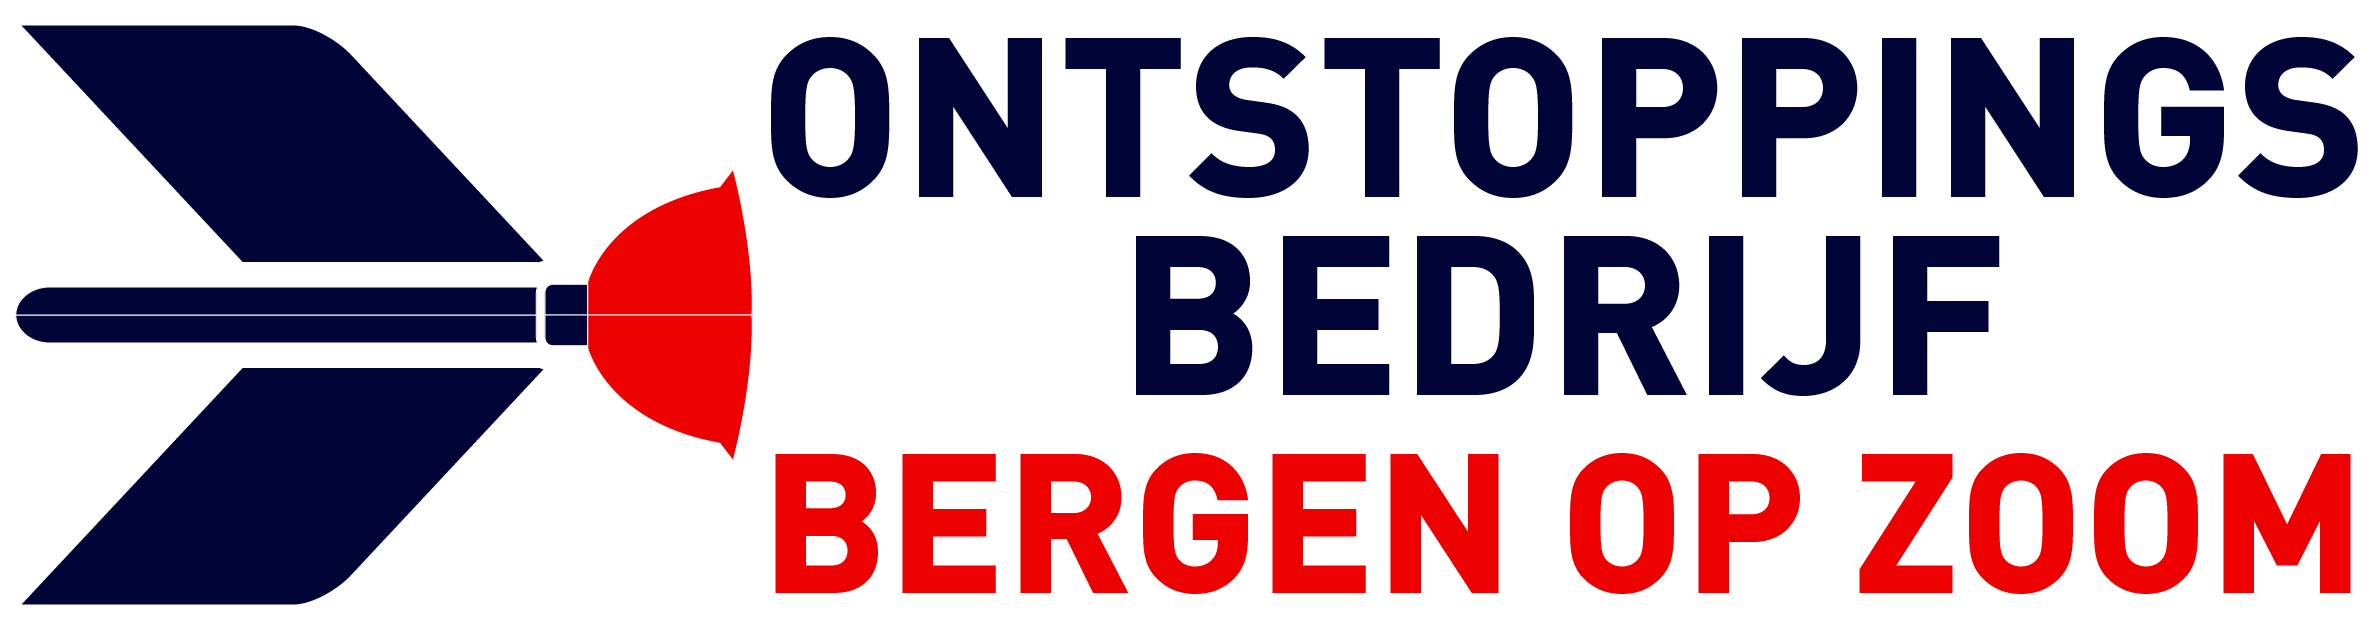 Ontstoppingsbedrijf Bergen op Zoom logo